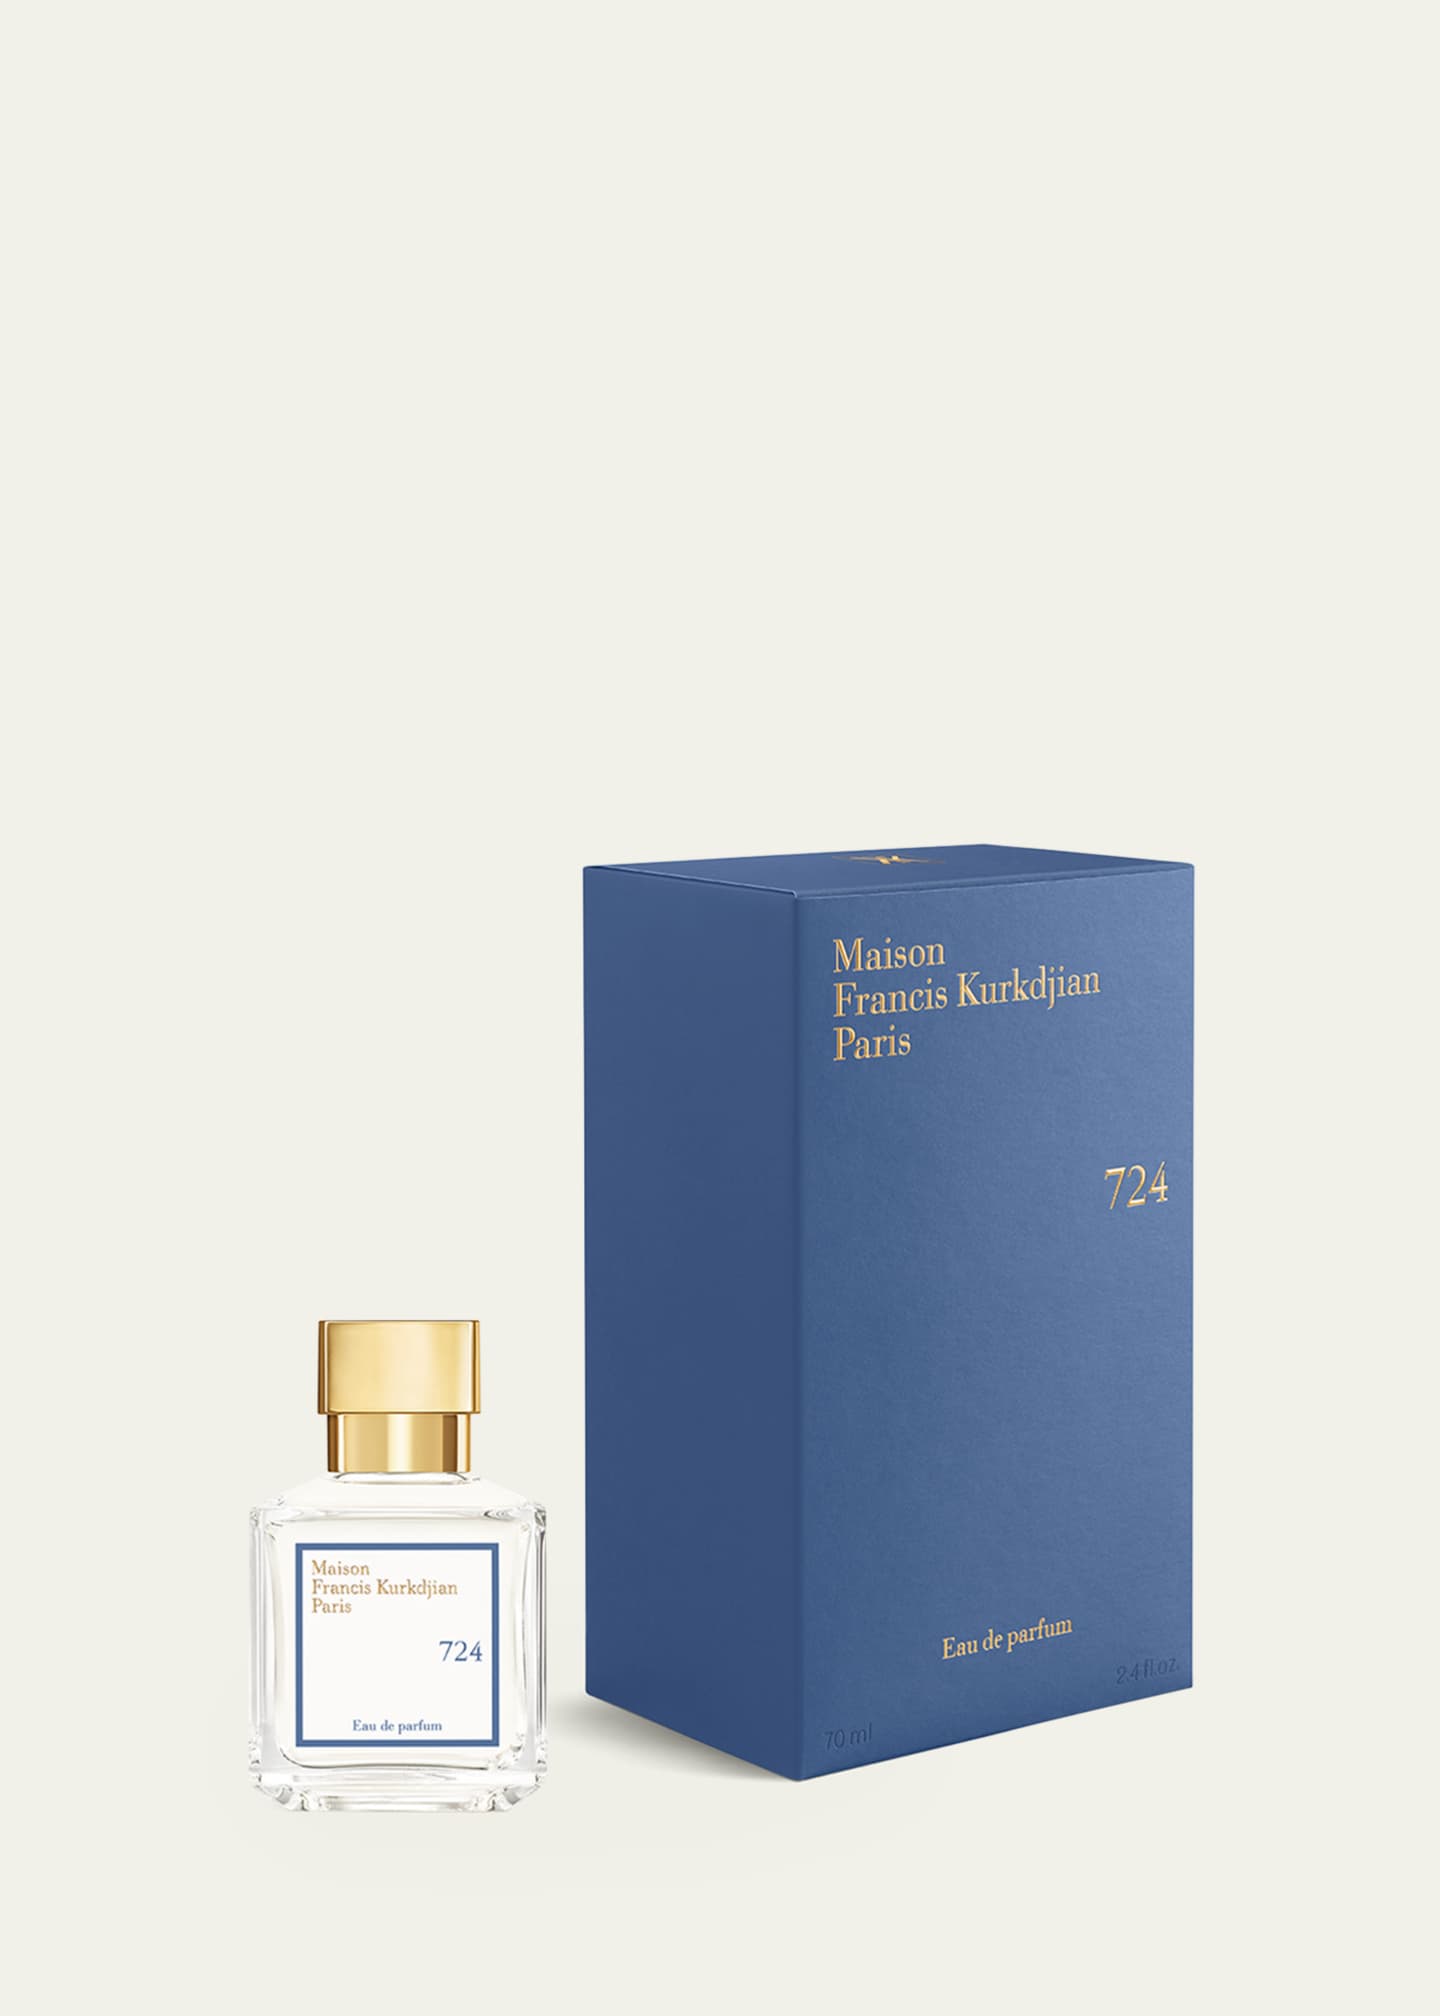 Maison Francis Kurkdjian 724 Eau de Parfum